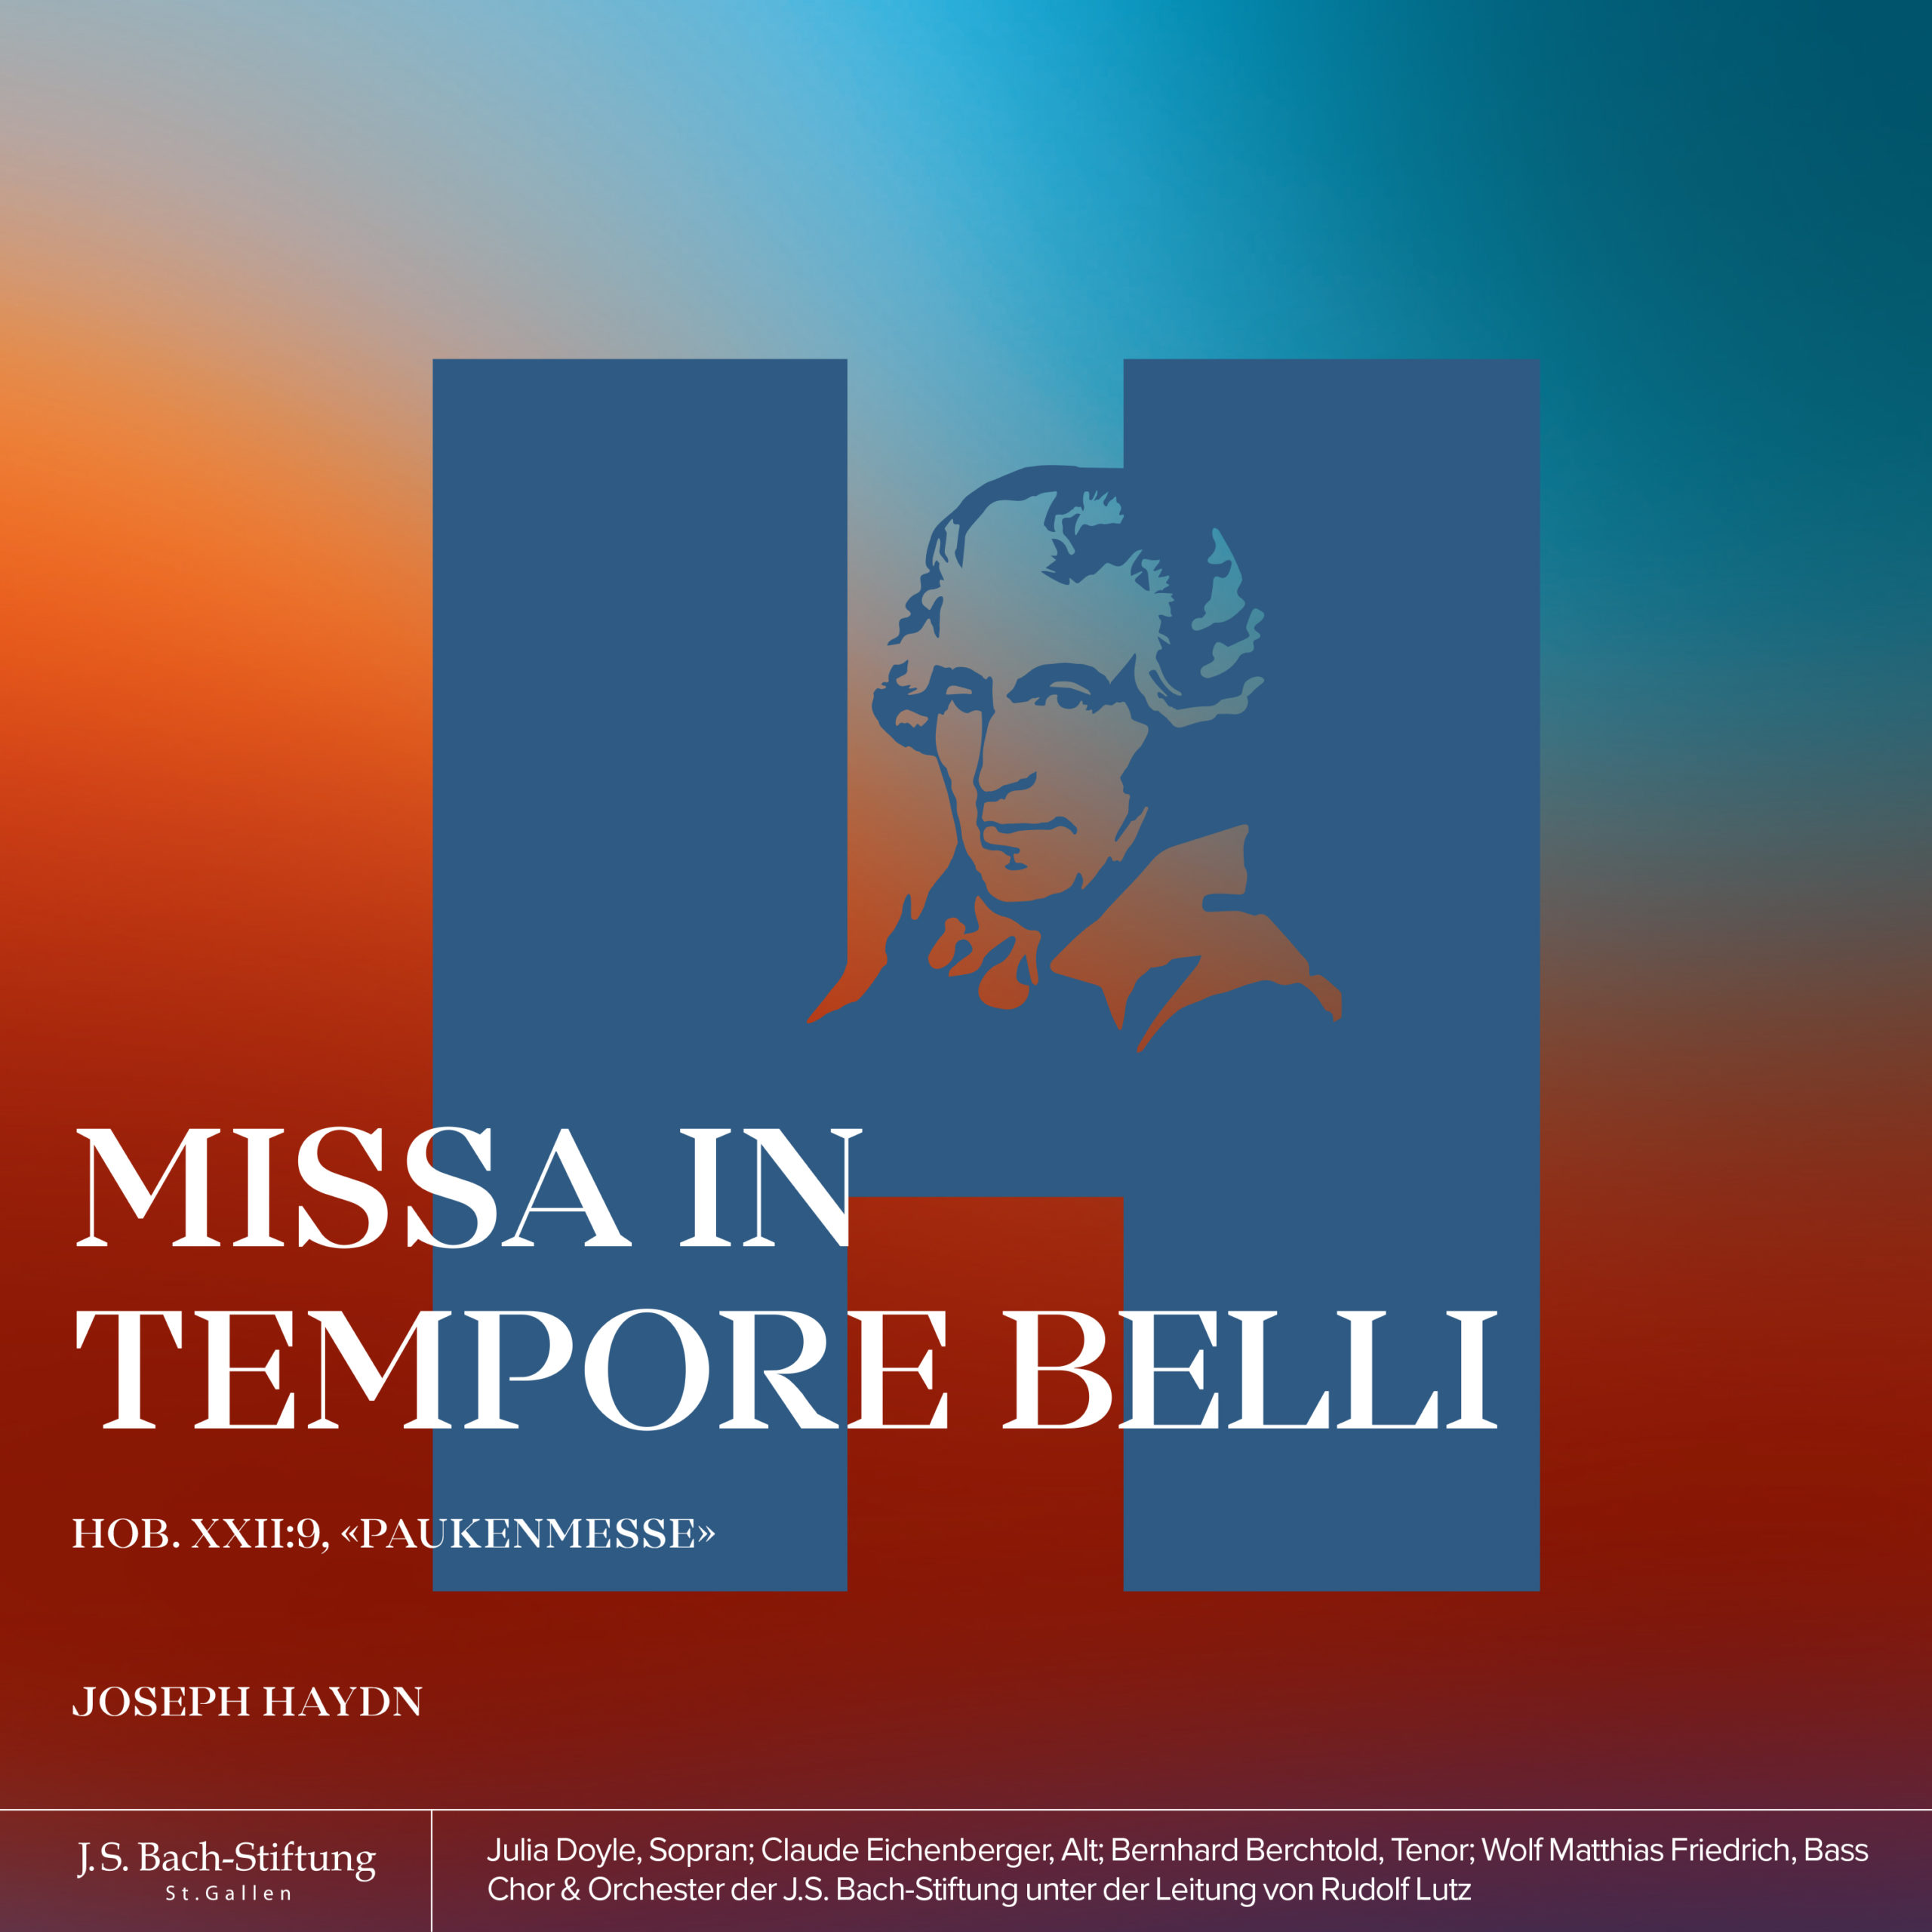 Haydn’s Missa in tempore belli